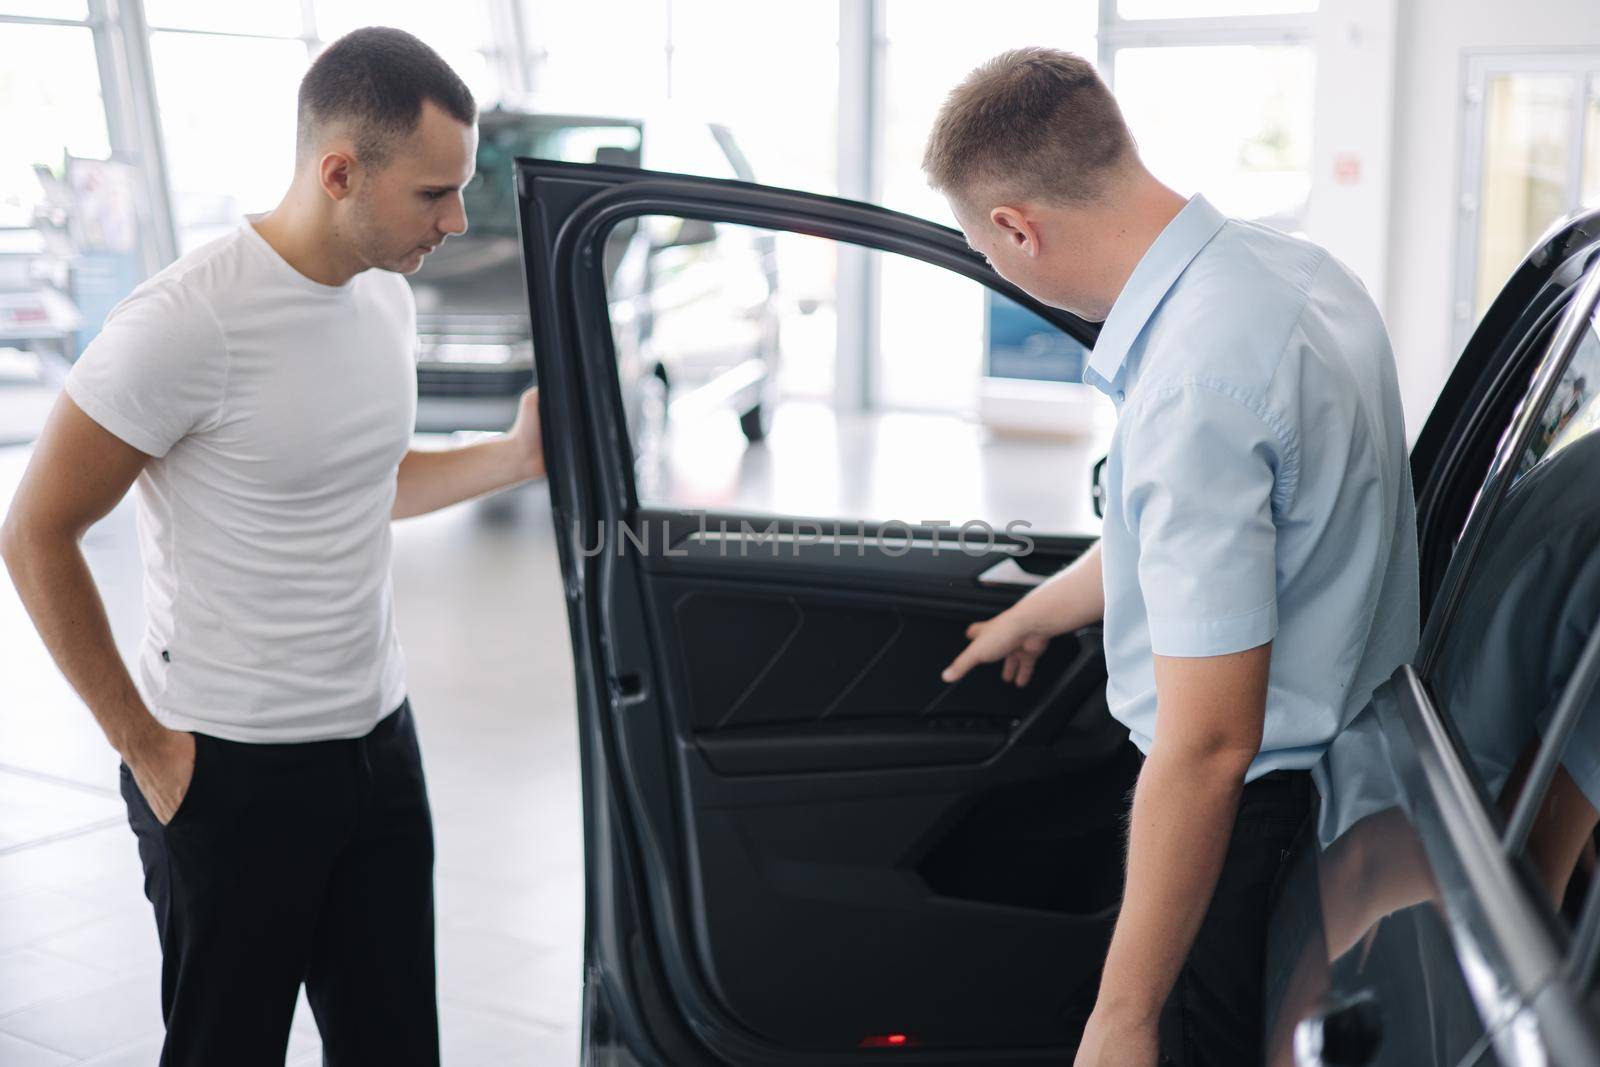 Salesperson selling cars at car dealership. Man choosing car in car showroom by Gritsiv